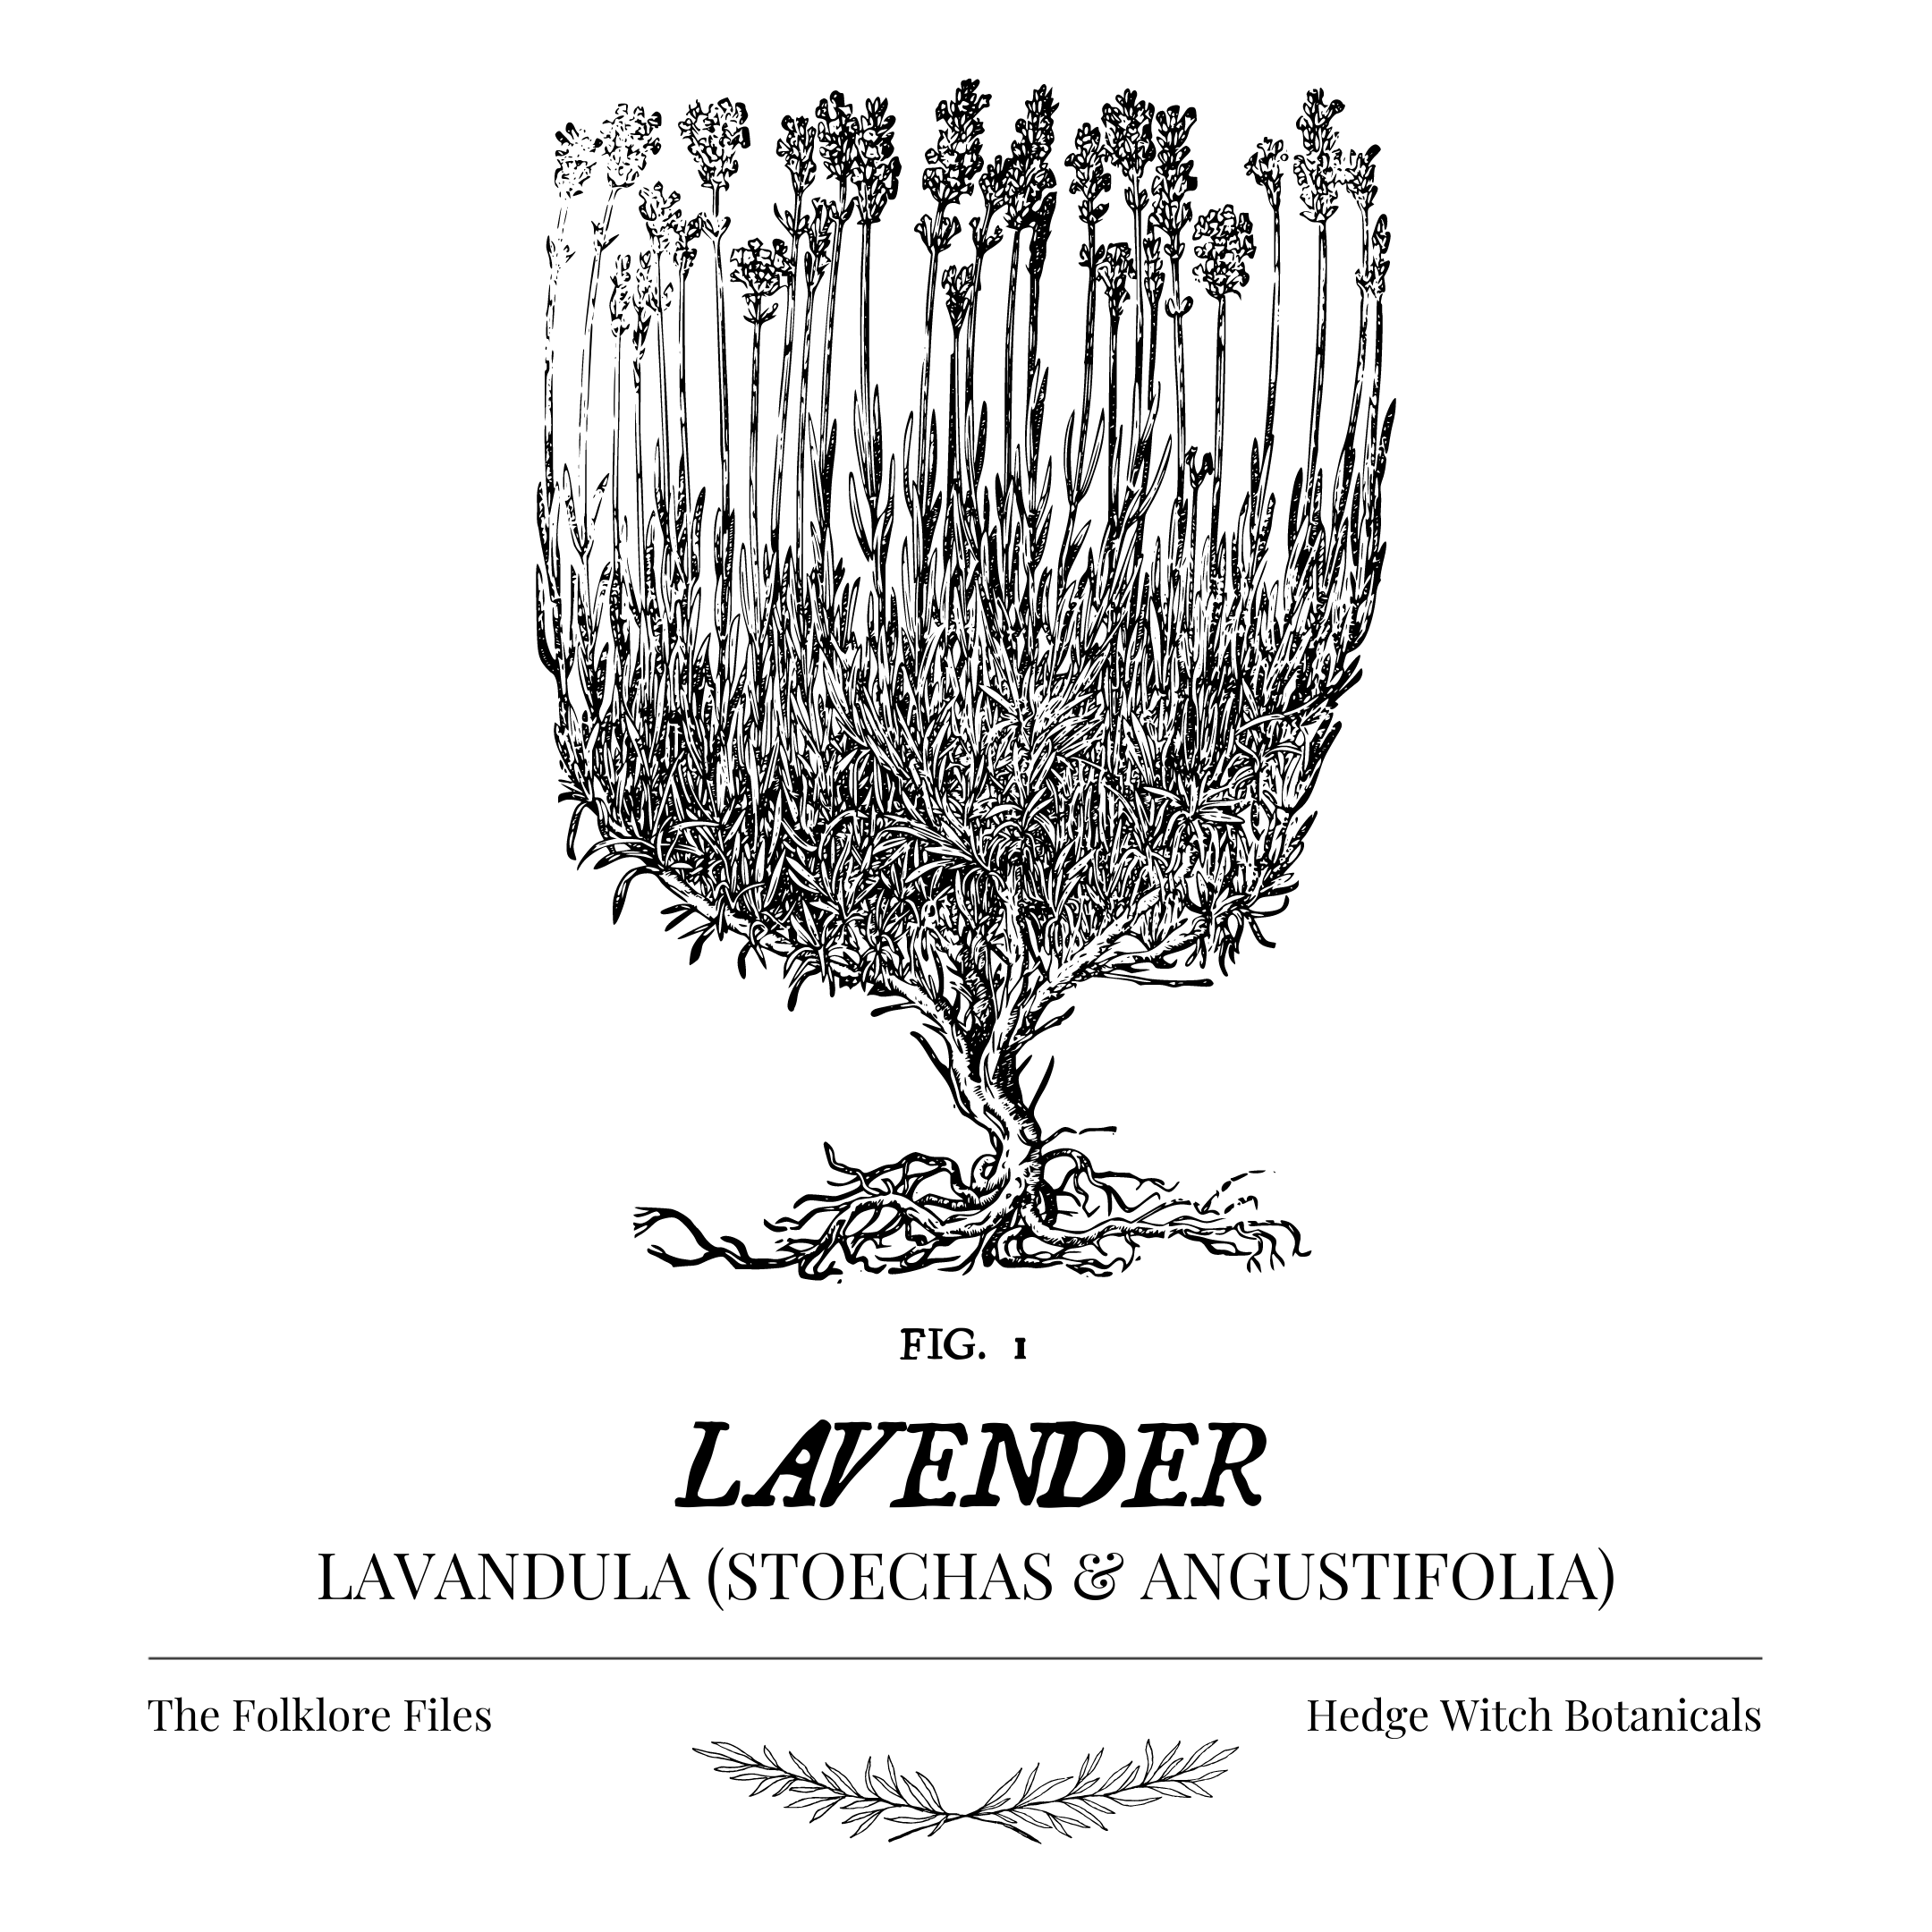 The Folklore Files: Lavender